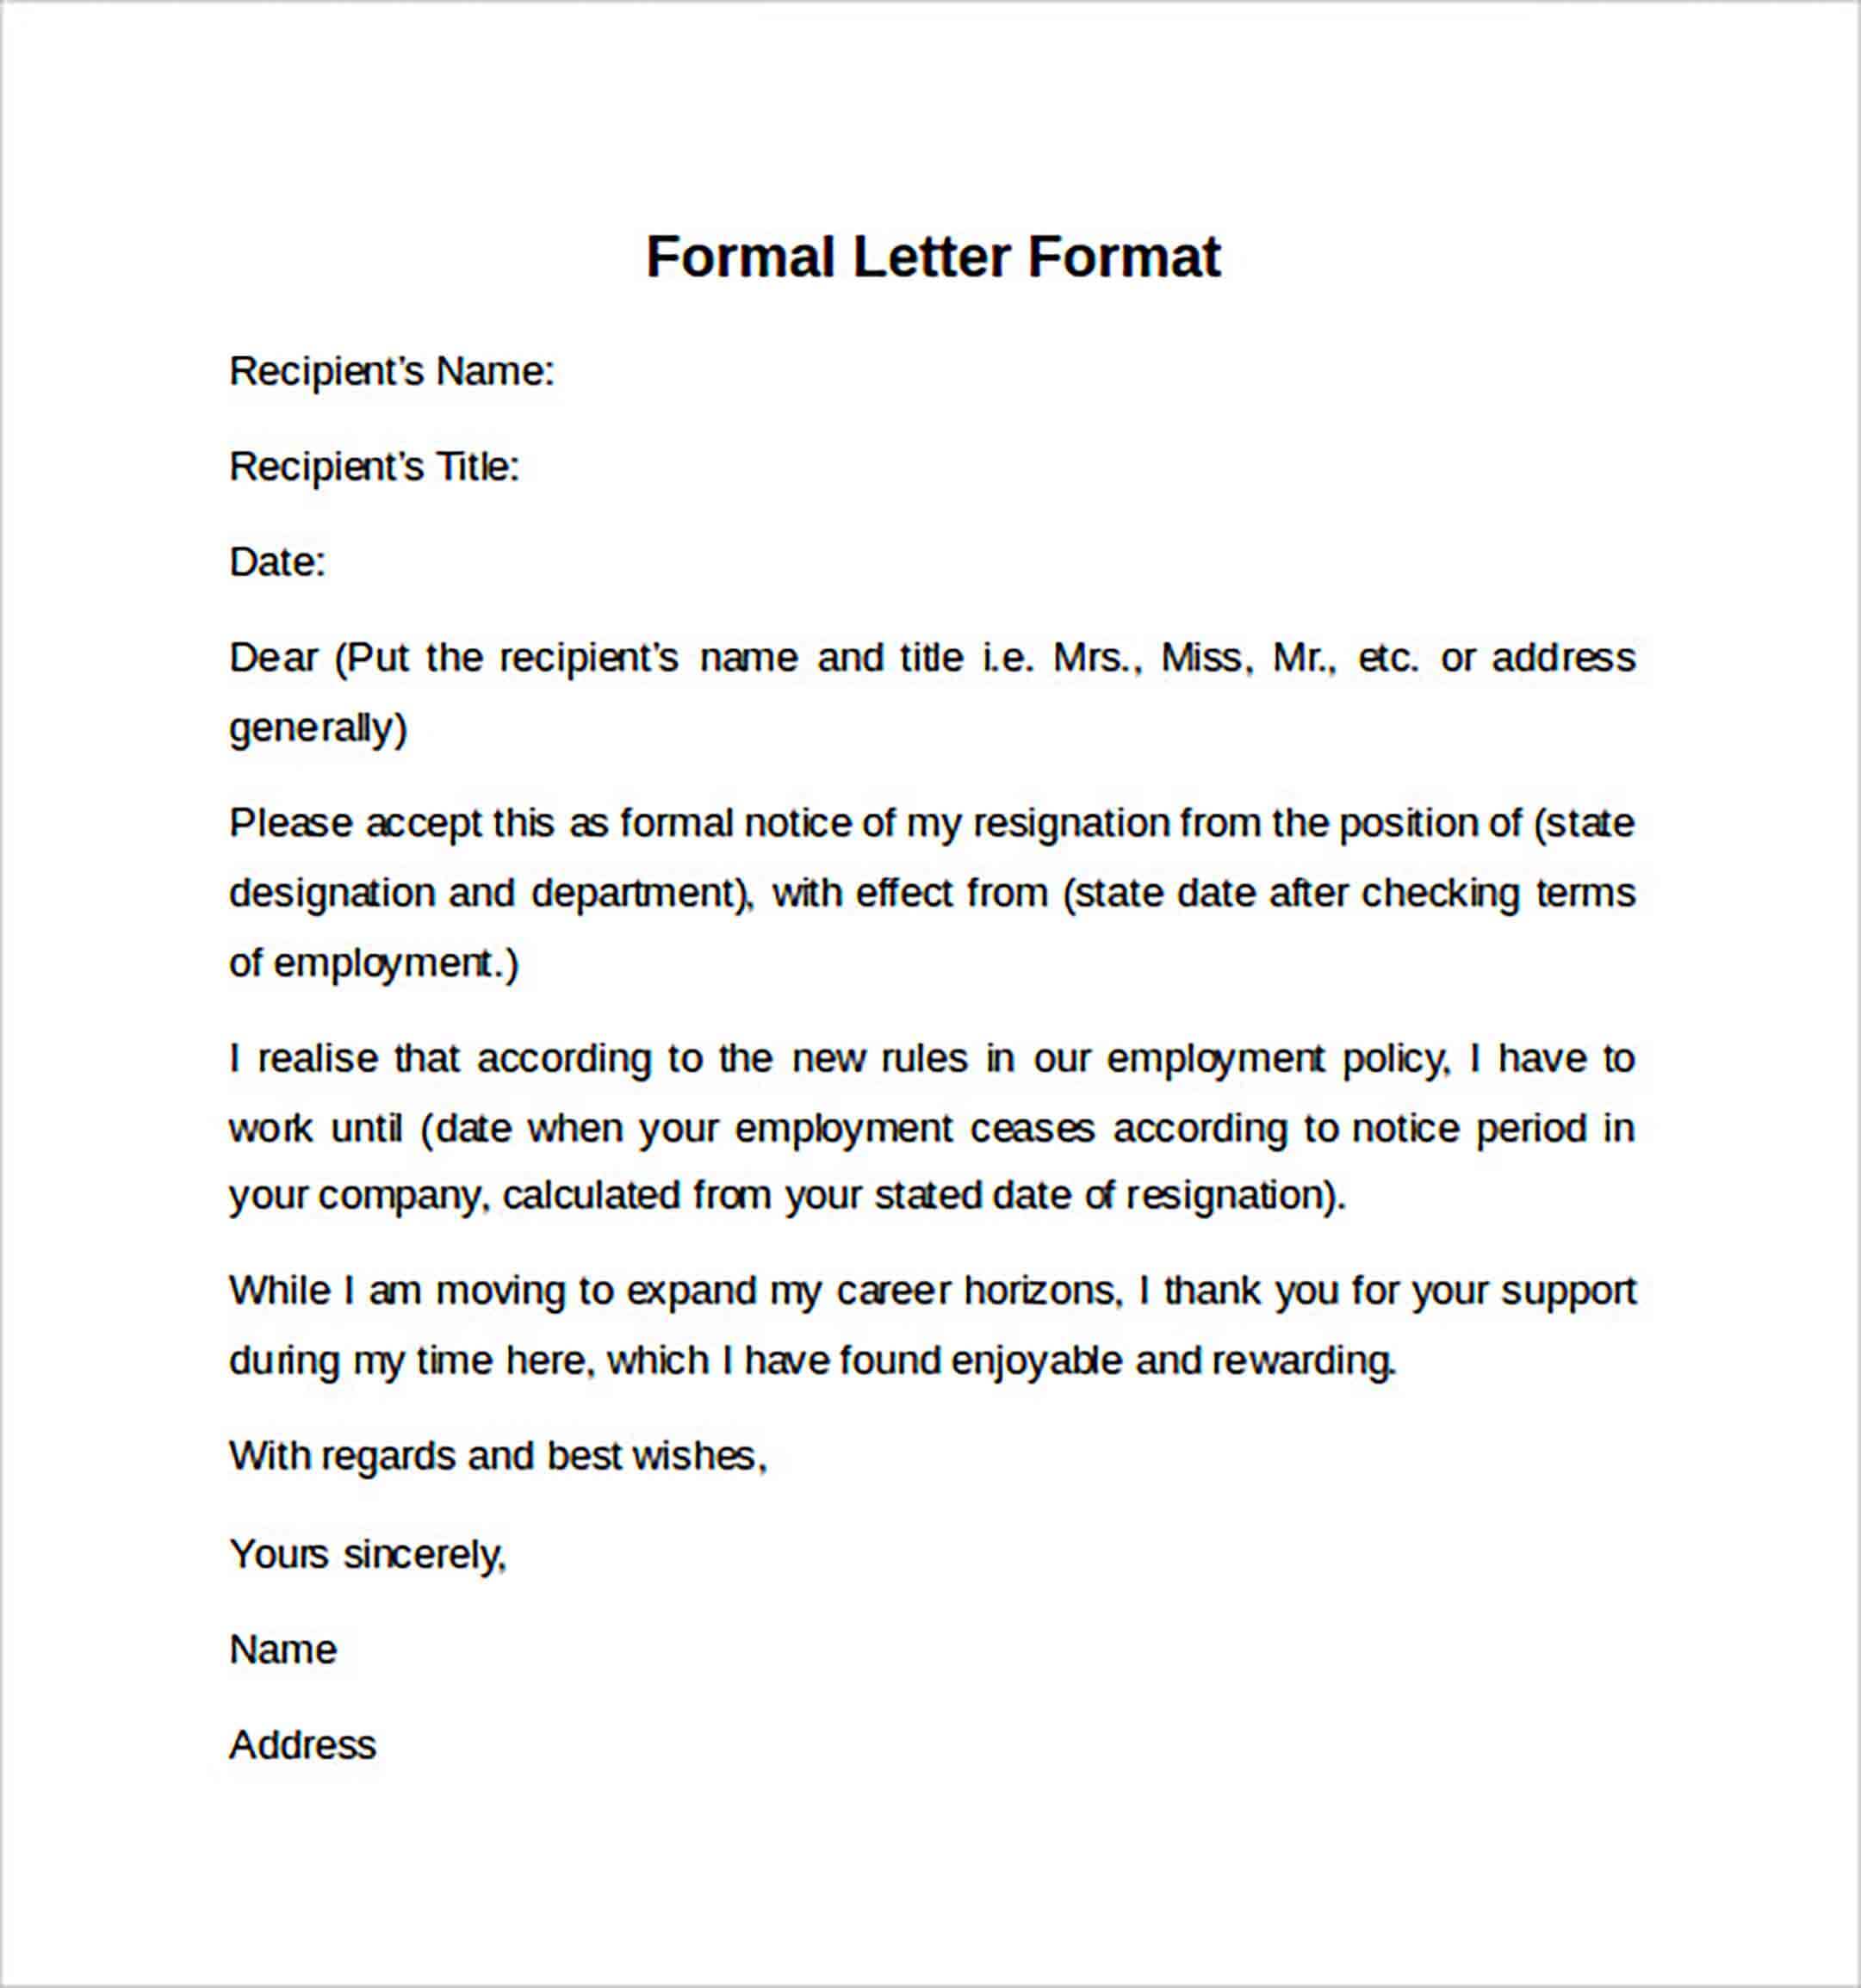 Formal Letter Format to